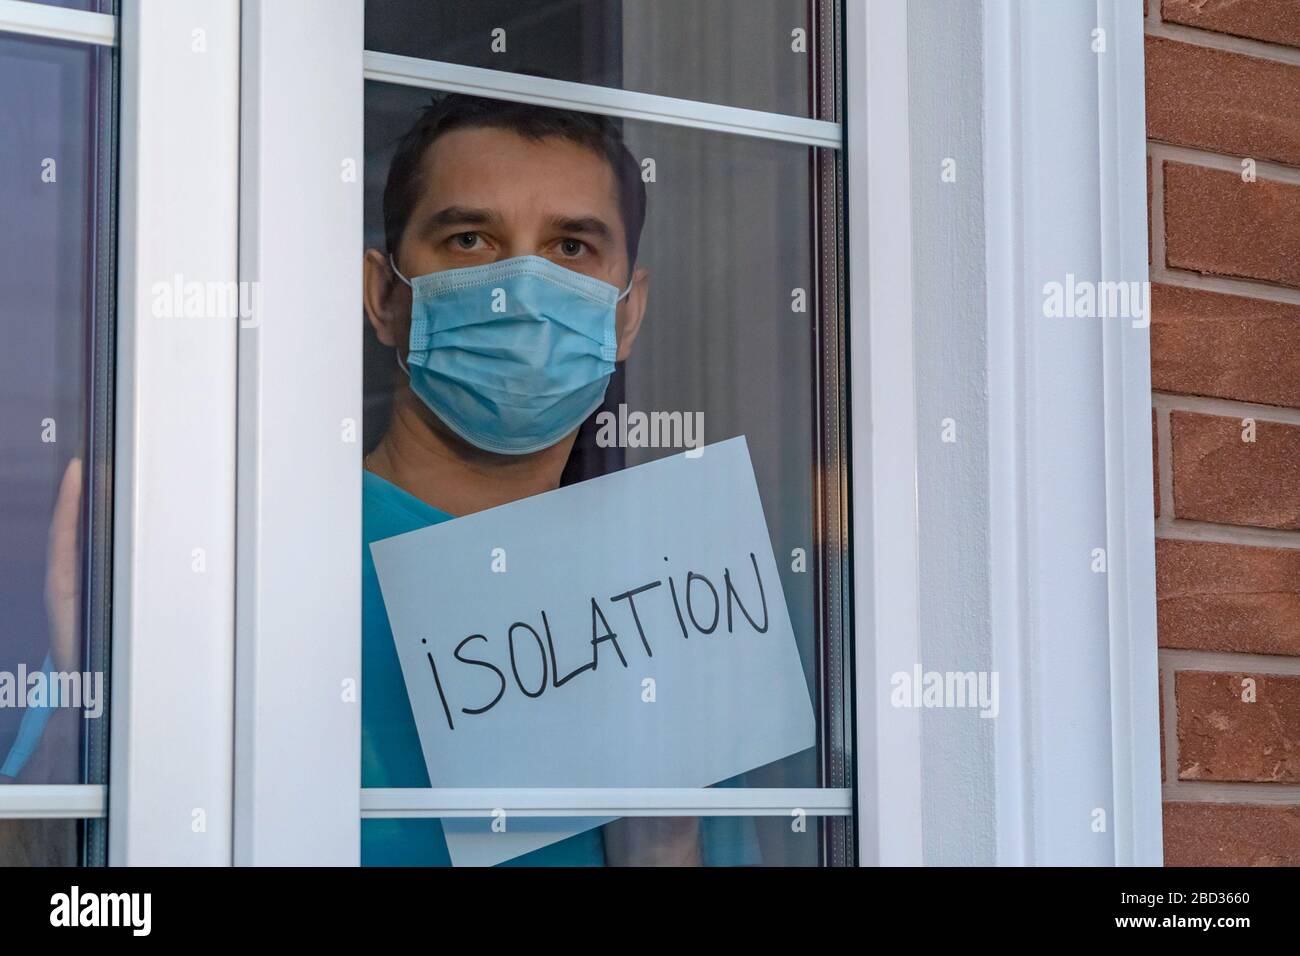 Quarantine self-isolation. Coronavirus COVID-19 Stock Photo